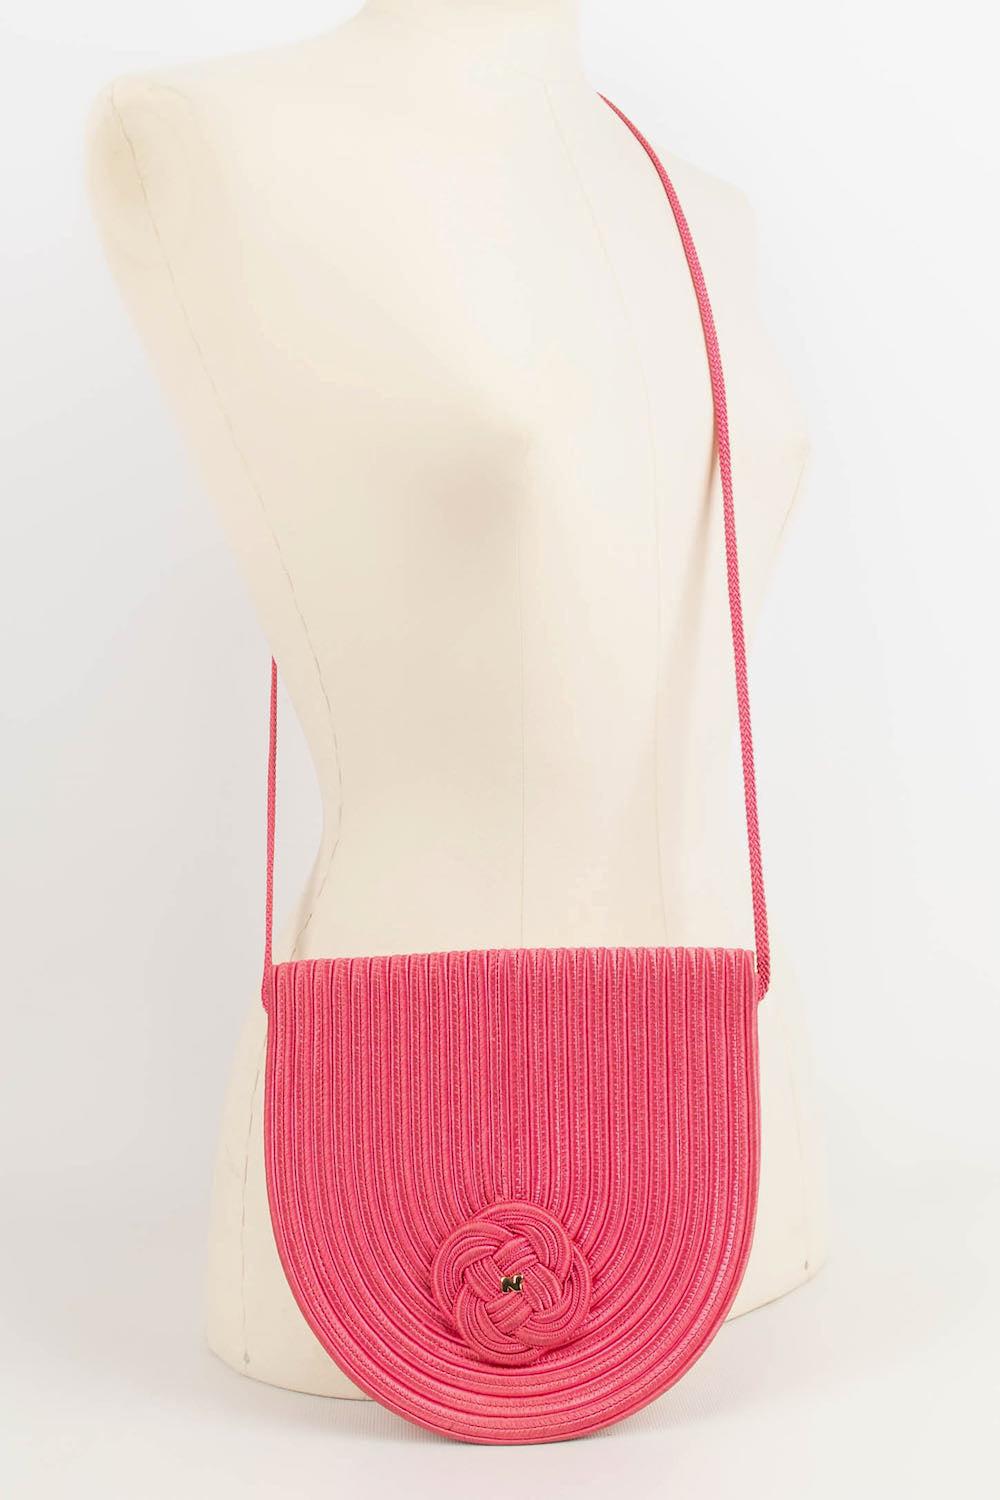 Nina Ricci Pink Passementerie Bag For Sale 4